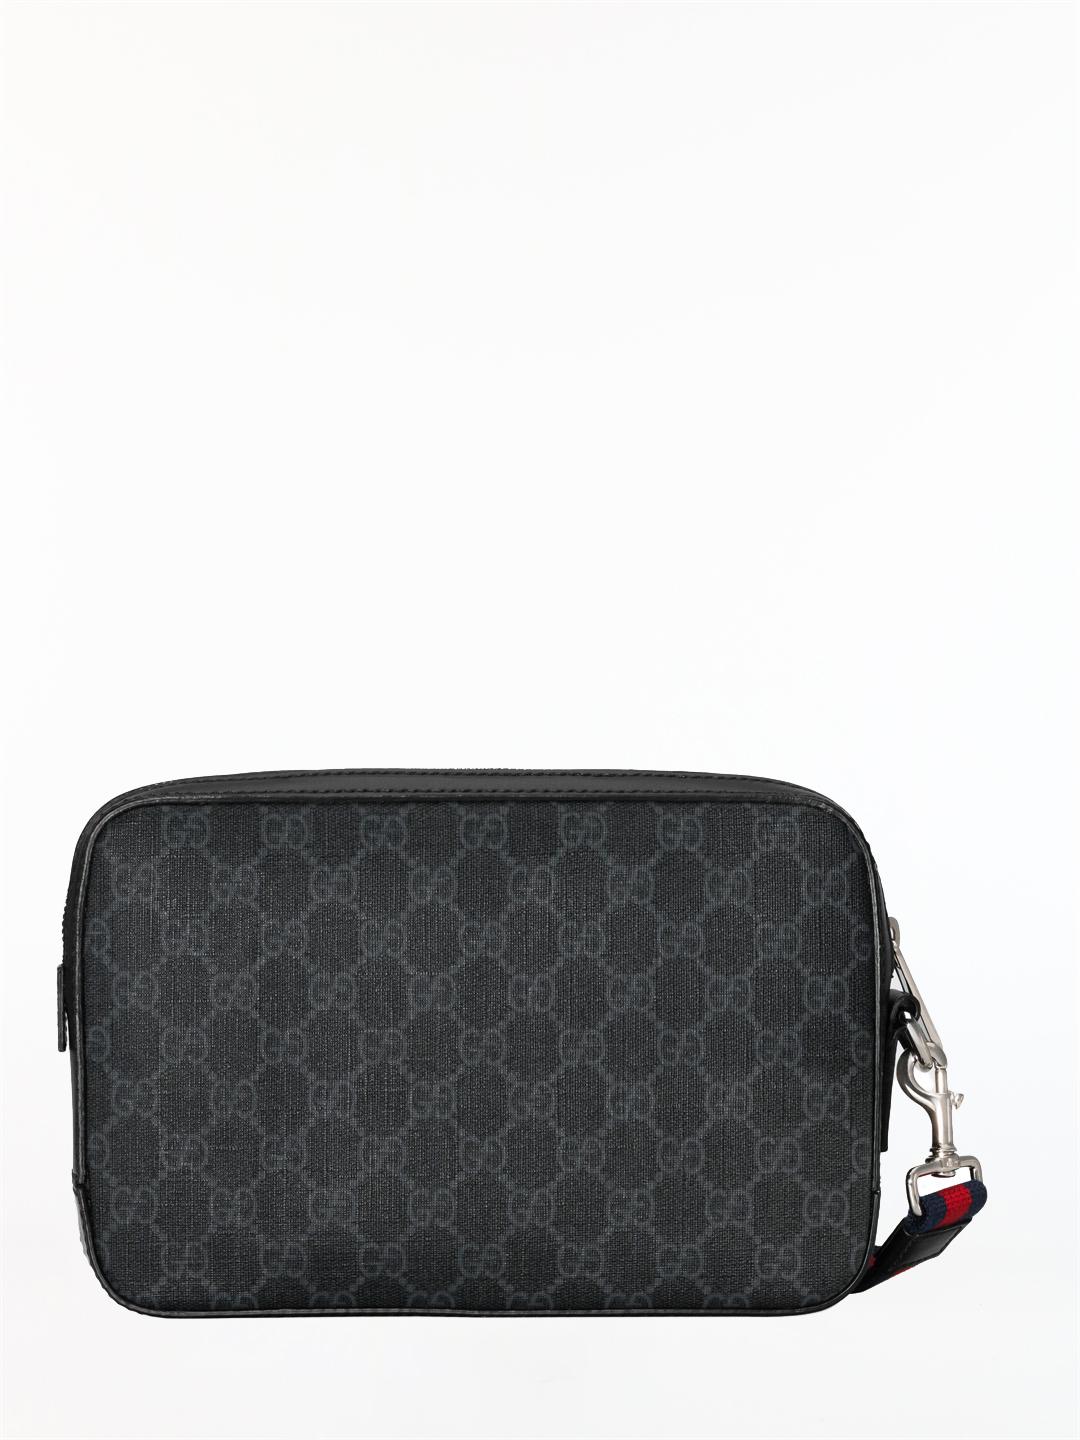 Gucci Men's GG Supreme Tote Bag in Black | End Clothing